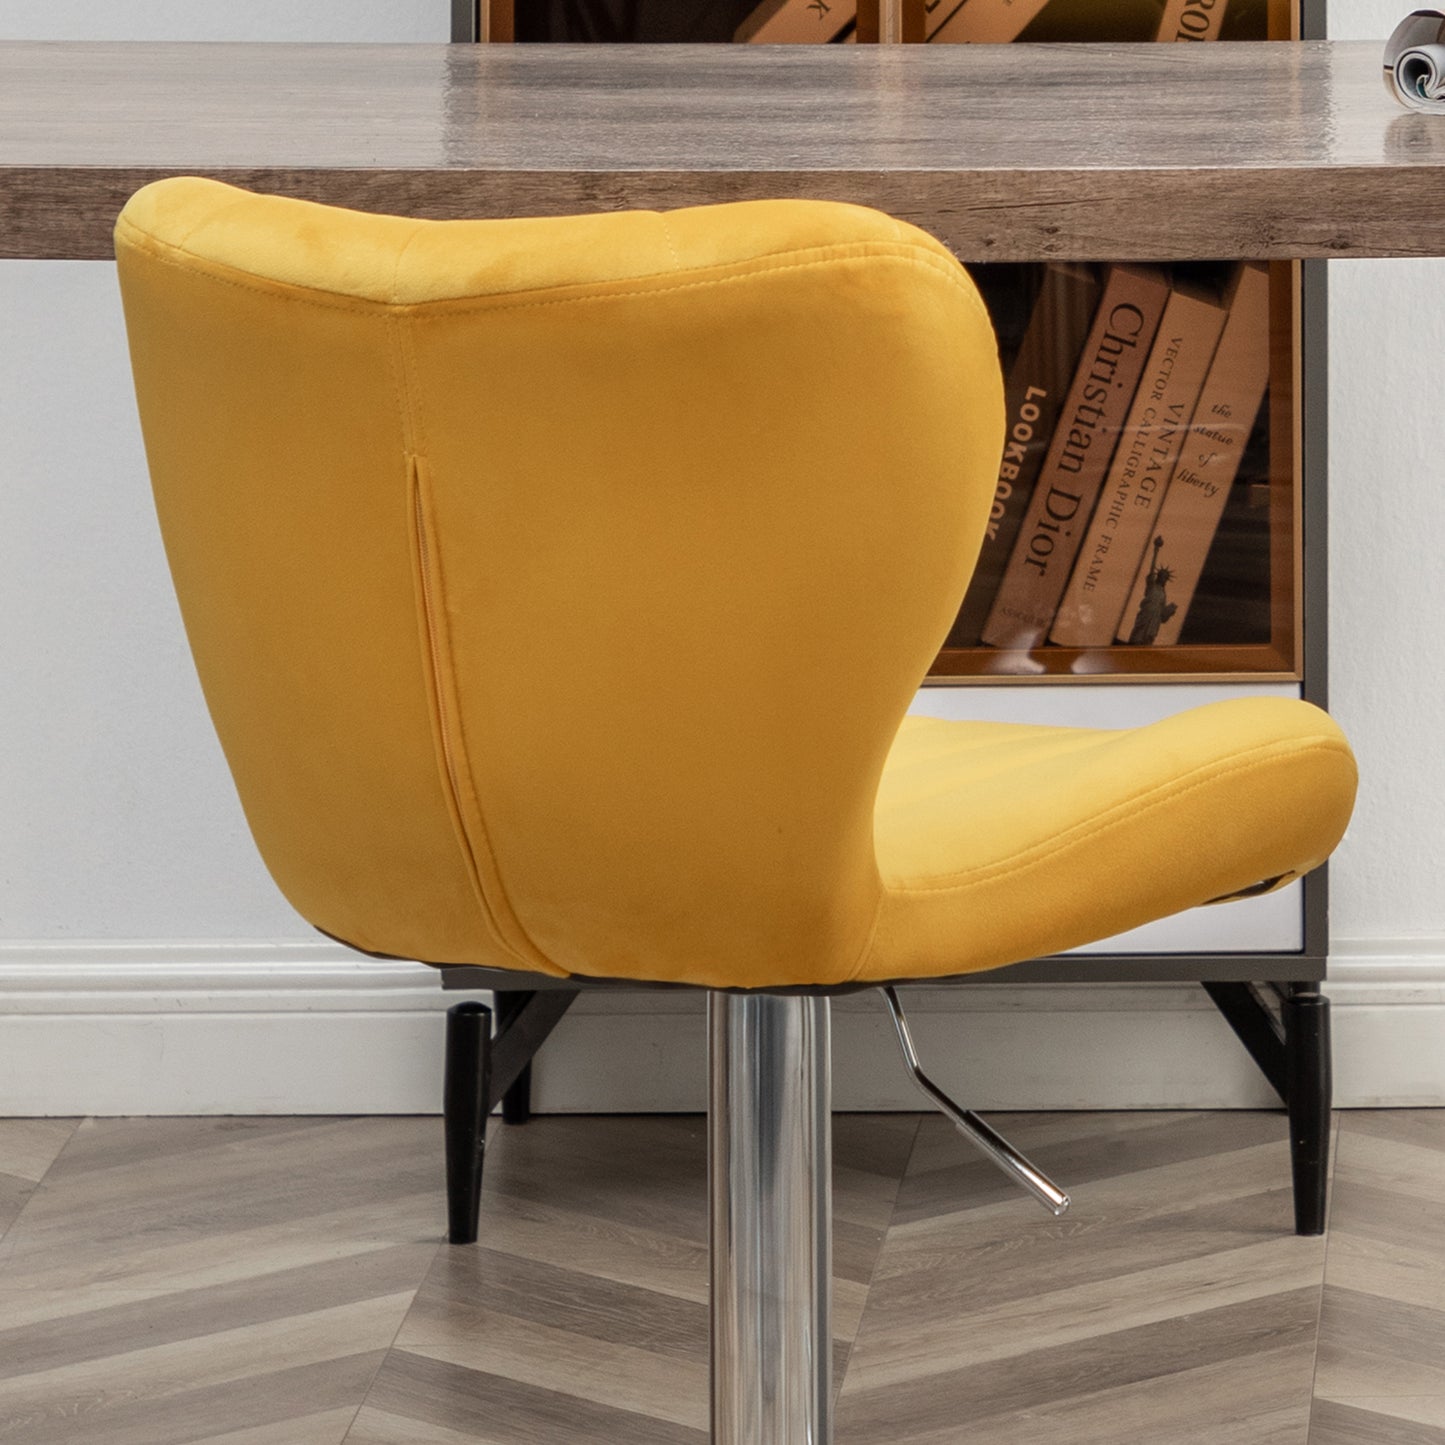 Ellston Upholstered Adjustable Swivel Barstools in Yellow, Set of 2